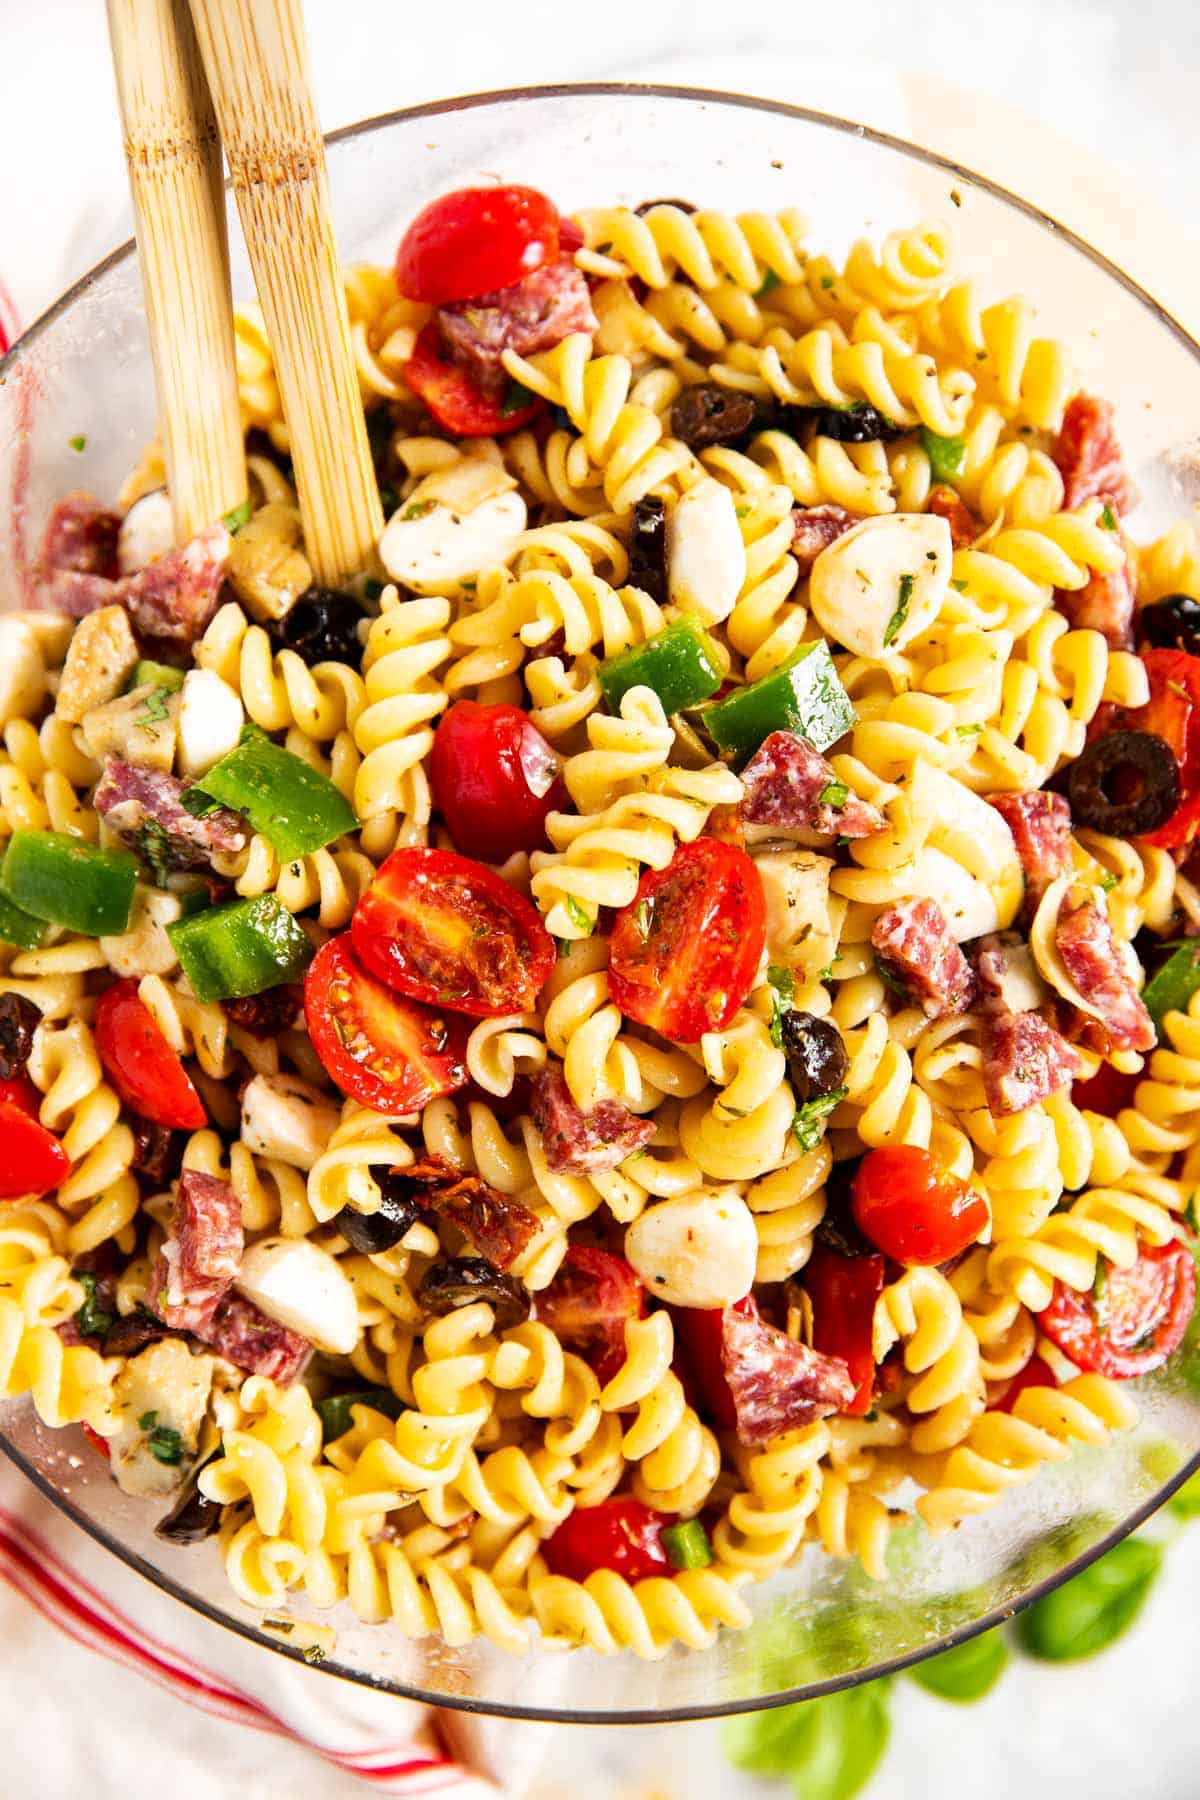 https://www.savorynothings.com/wp-content/uploads/2021/05/italian-pasta-salad-recipe-image-1.jpg